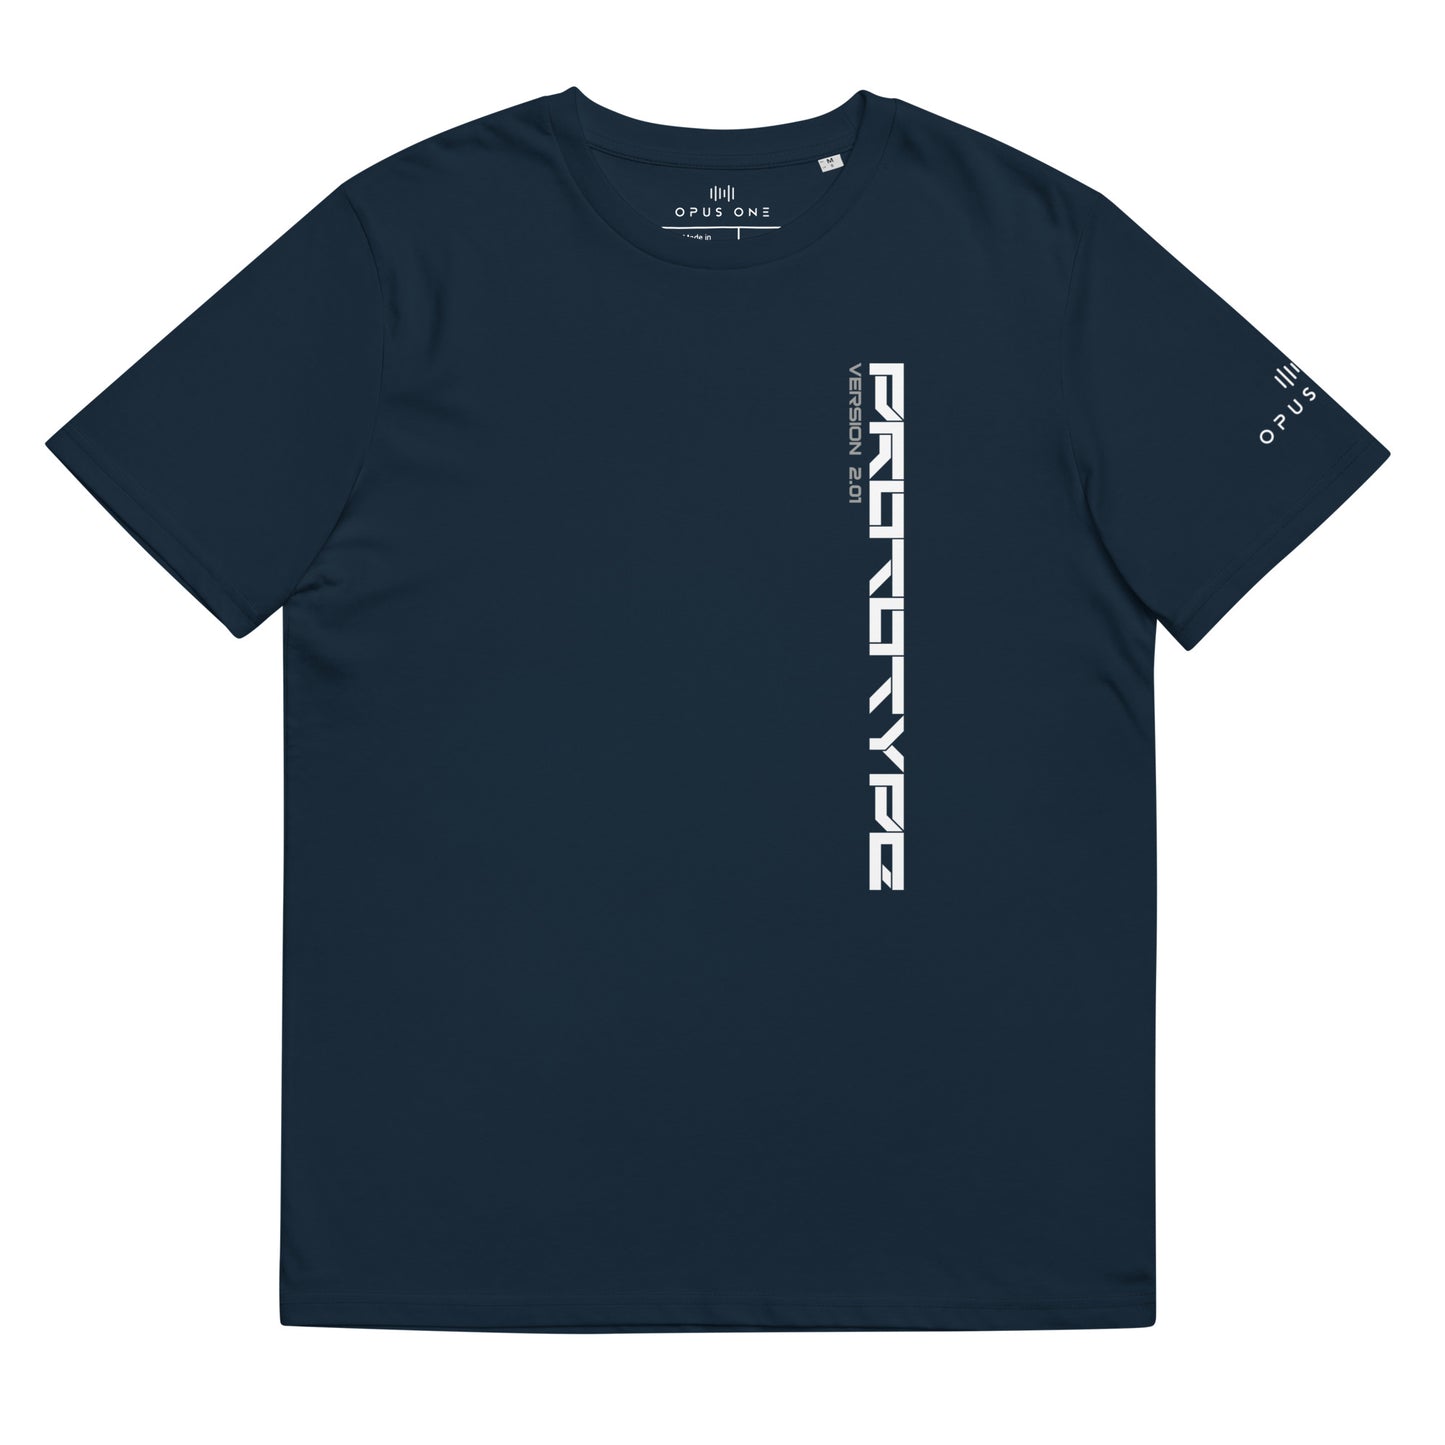 Prototype (v2) Unisex organic cotton t-shirt (White Text)